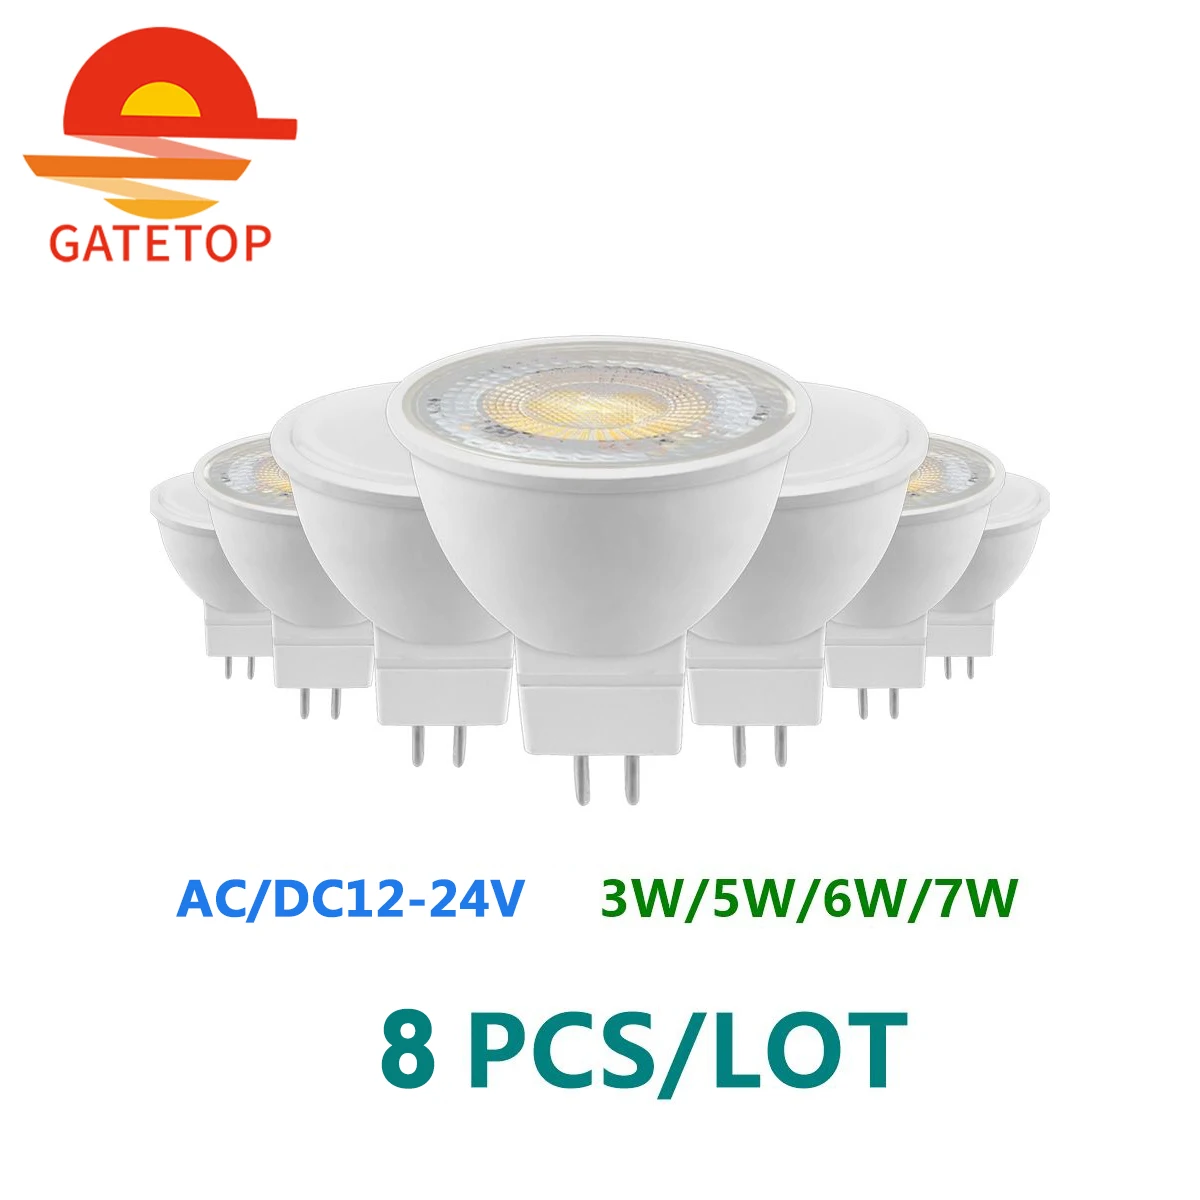 

8PCS AC/DC12V-24V Spot Foco MR16 3W-7W Warm White Day Light LED Light Lamp For Home Decoration Replace 50W Halogen Spotlight